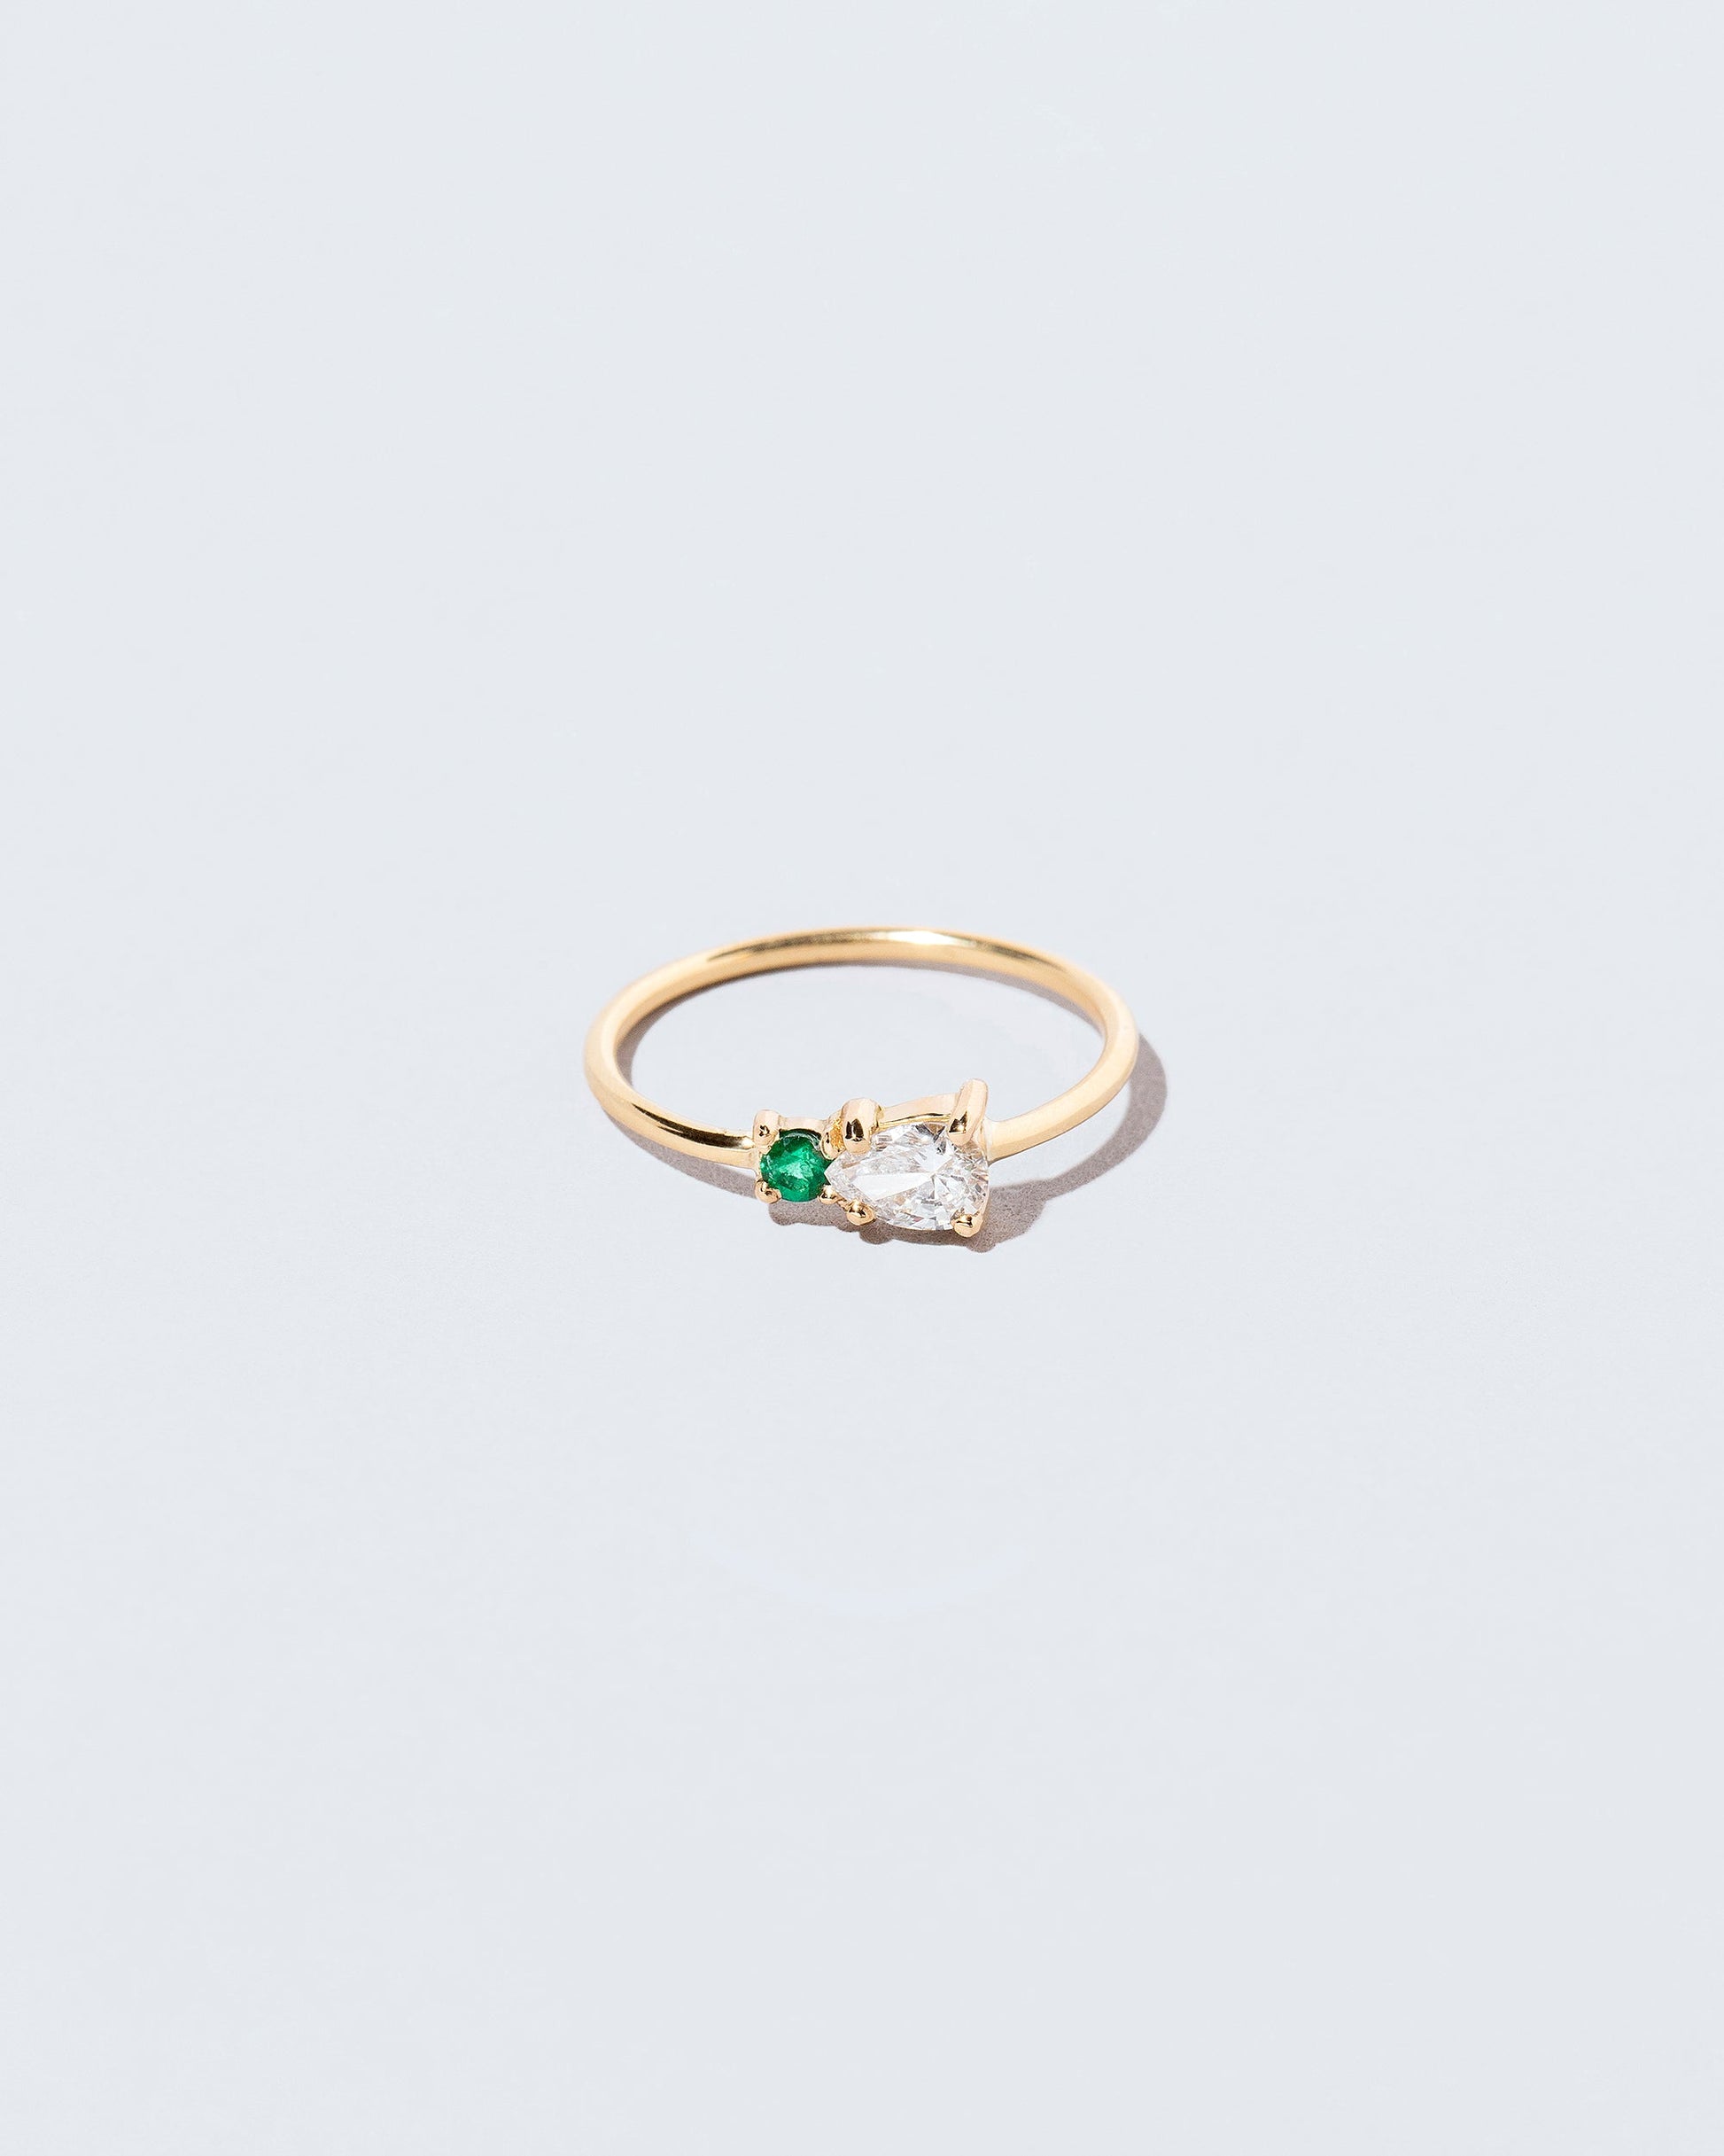 Diamond & Emerald Teardrop Ring on light color background.